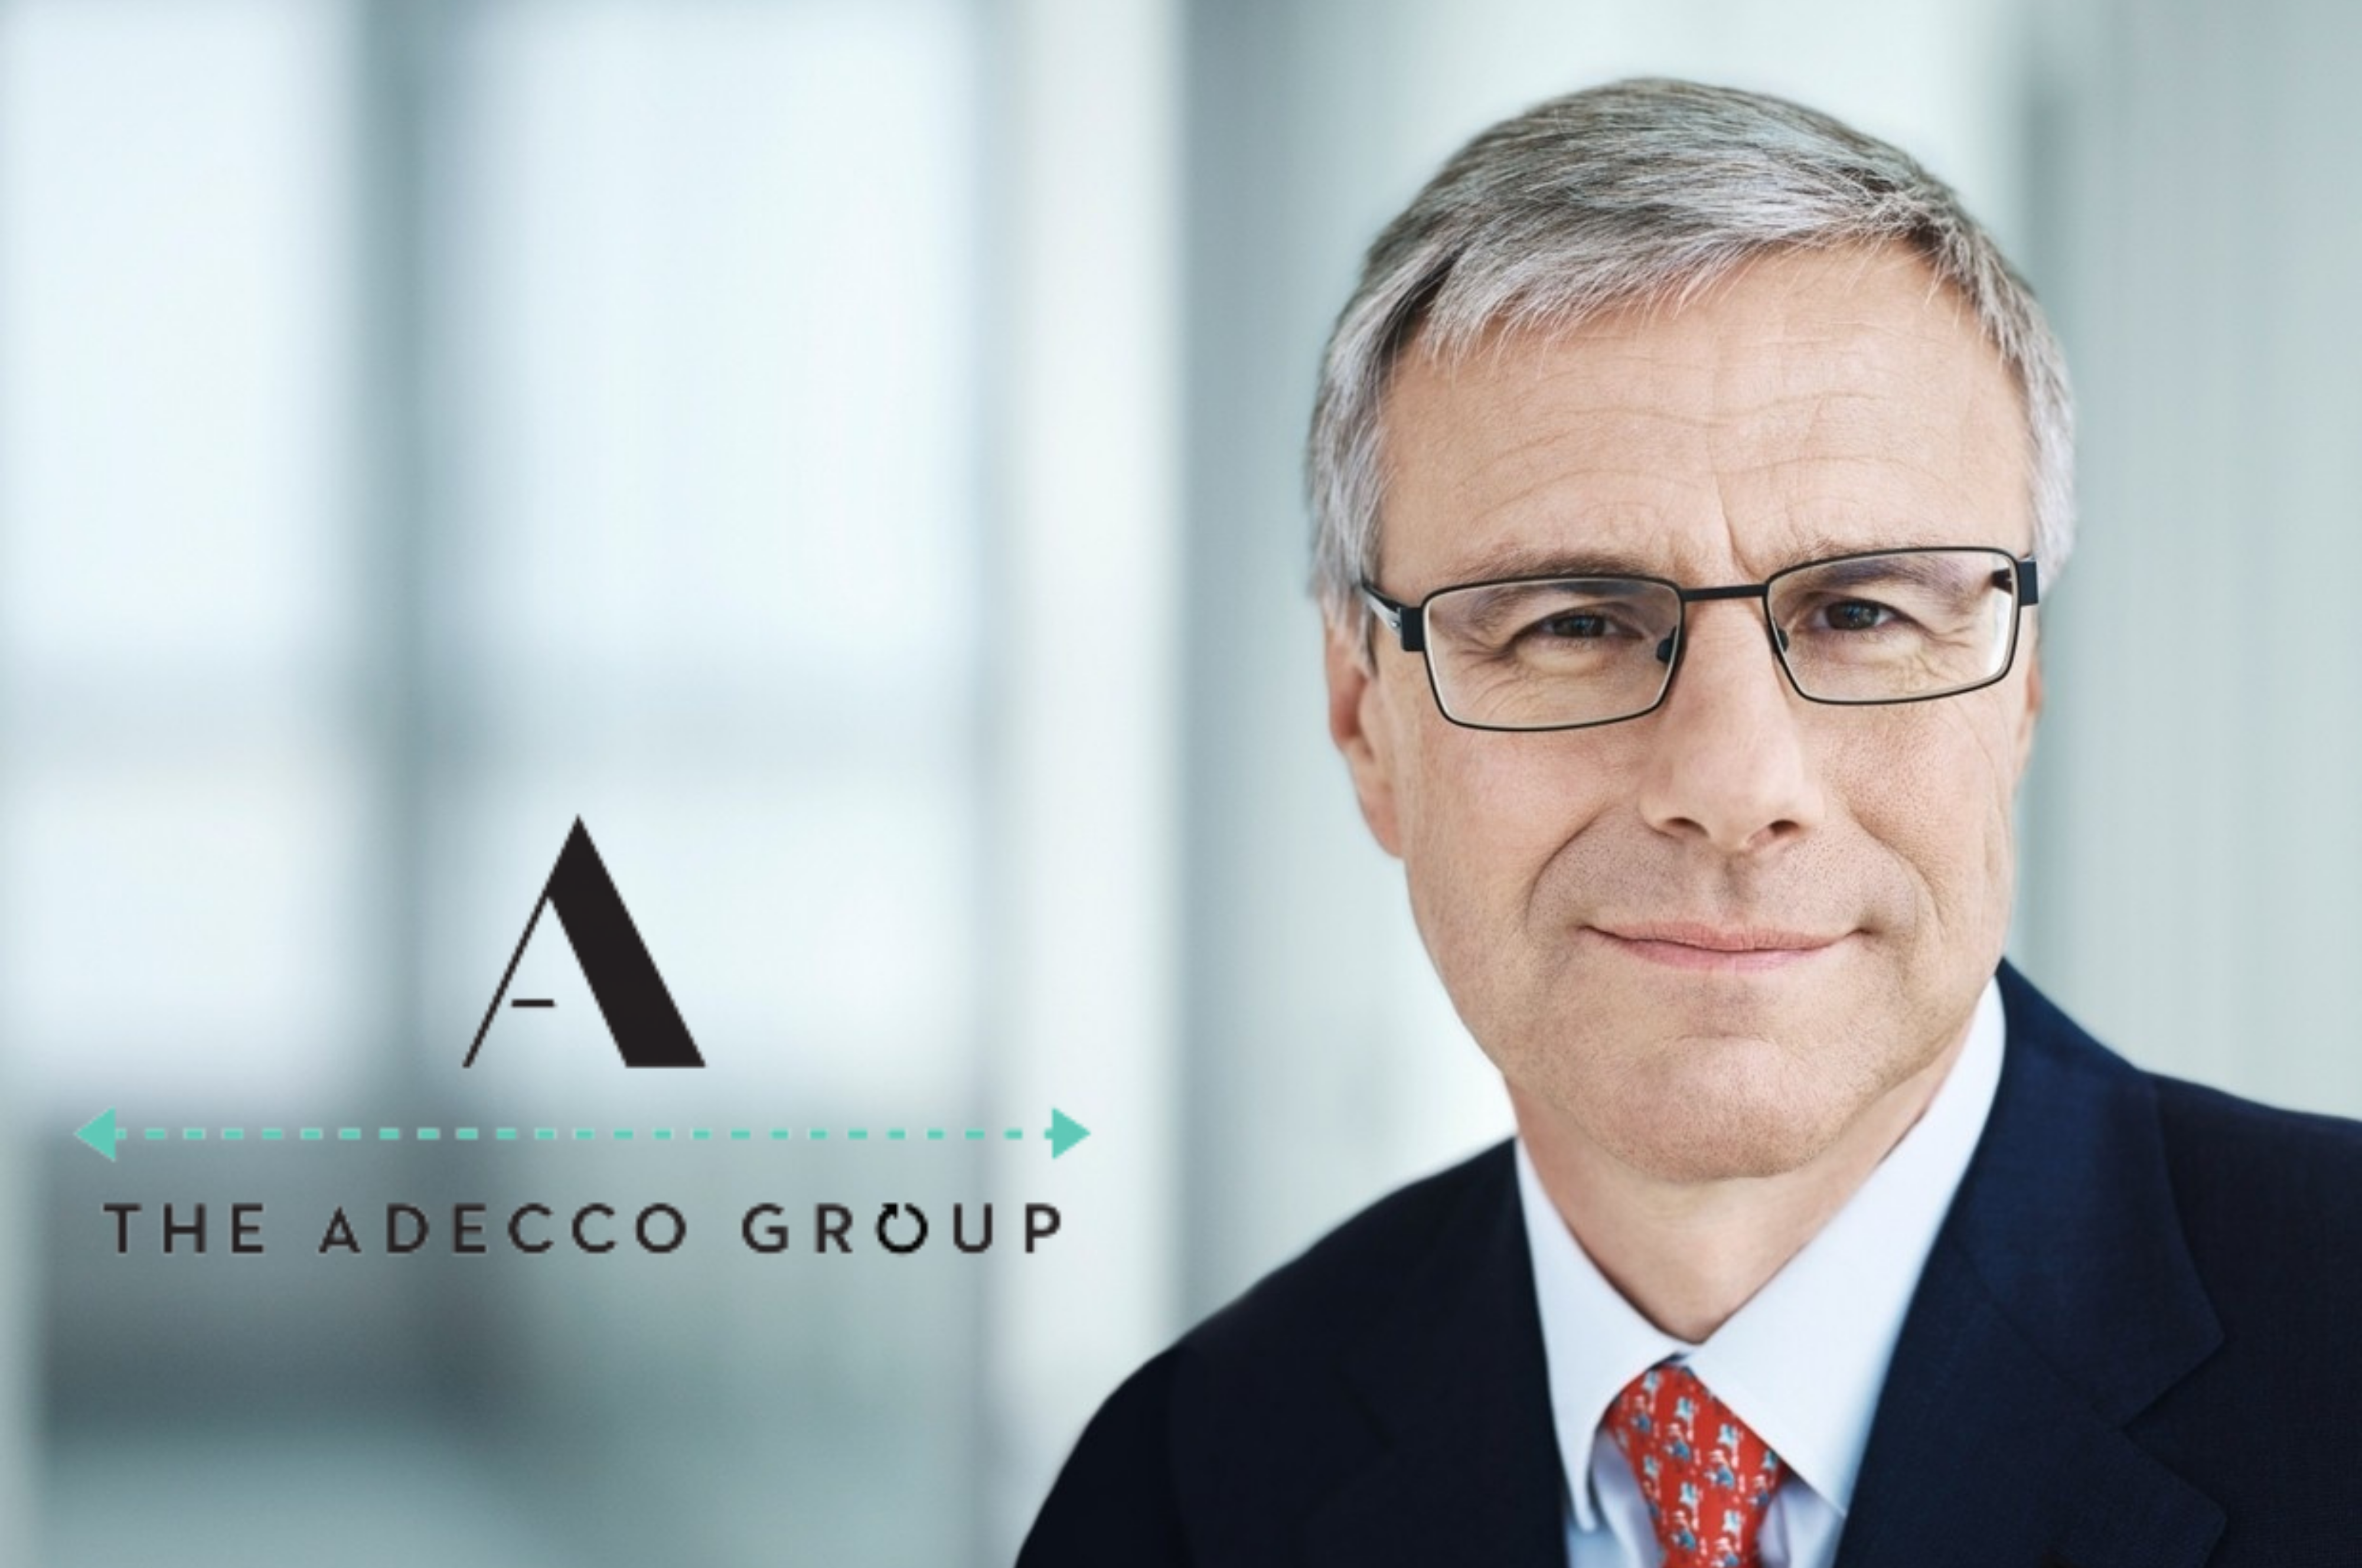 Alain Dehaze, The Adecco Group CEO